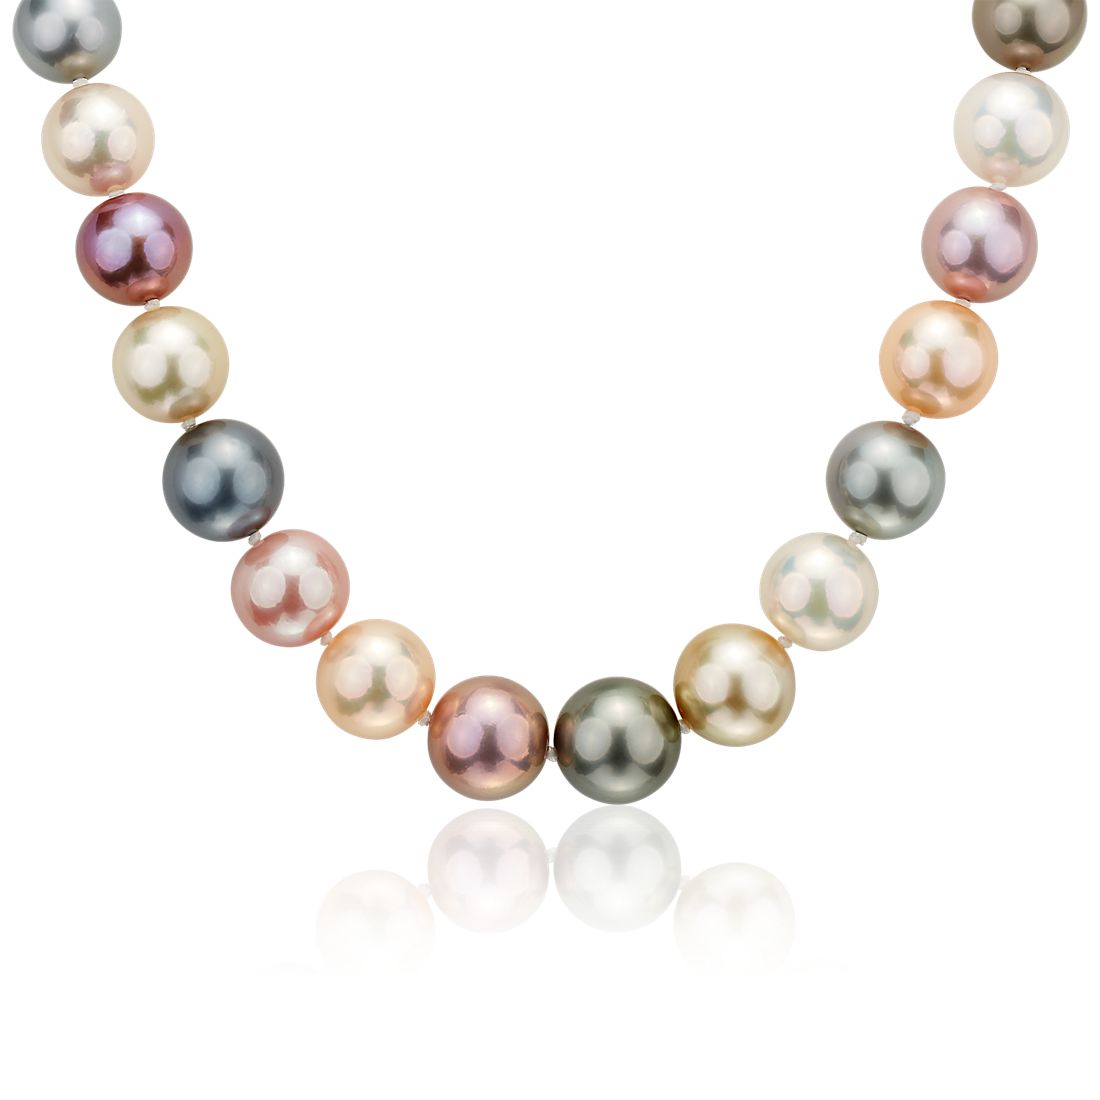 Multicolored Pearl Strand Necklace in 18k White Gold